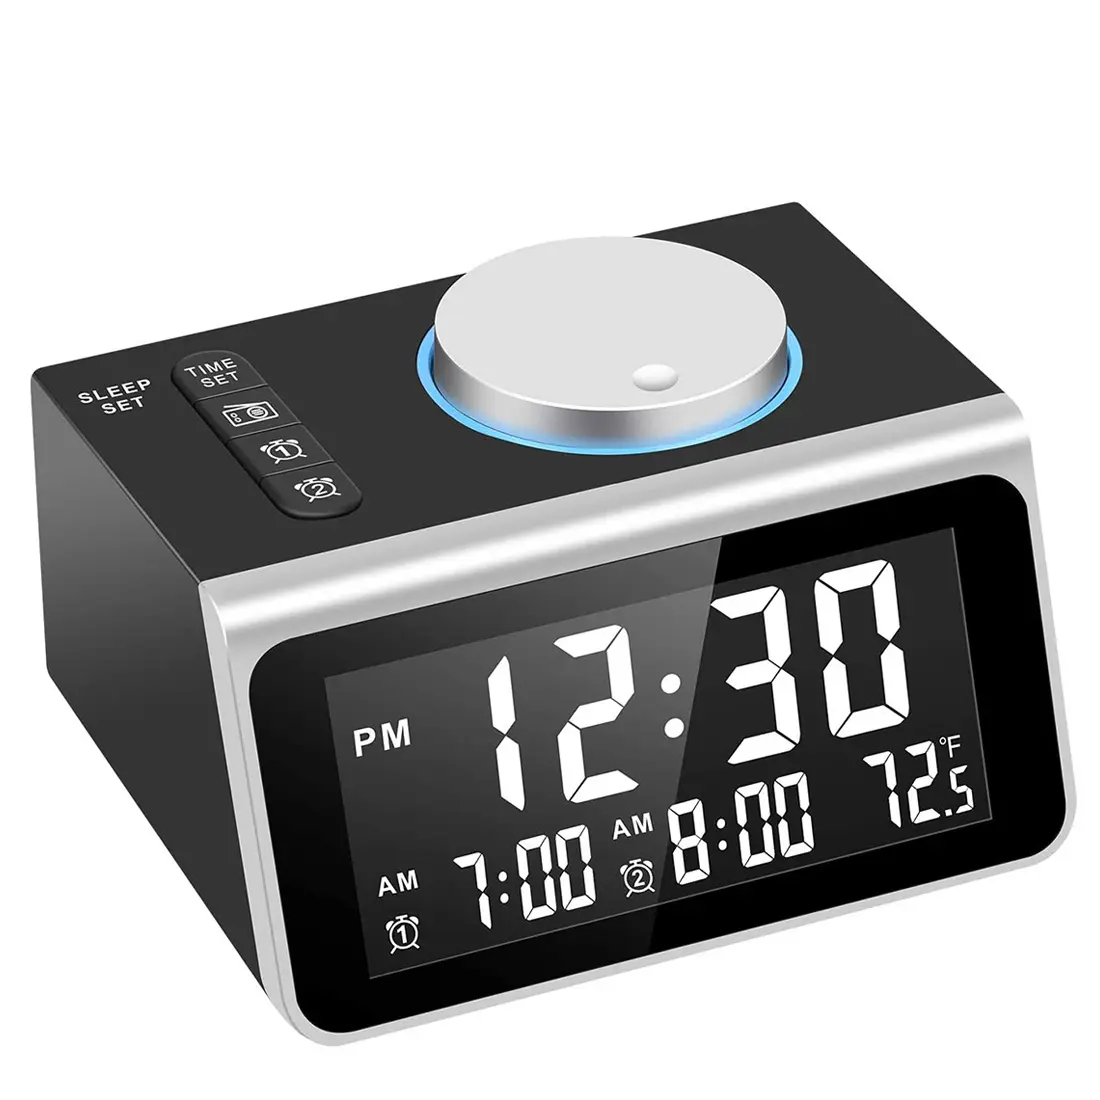 Cheap OEM FM Radio Alarm Clock Sleep Desk Clock with Dual USB Charging Adjustable Volume Brightness for,Bo l,Walmart